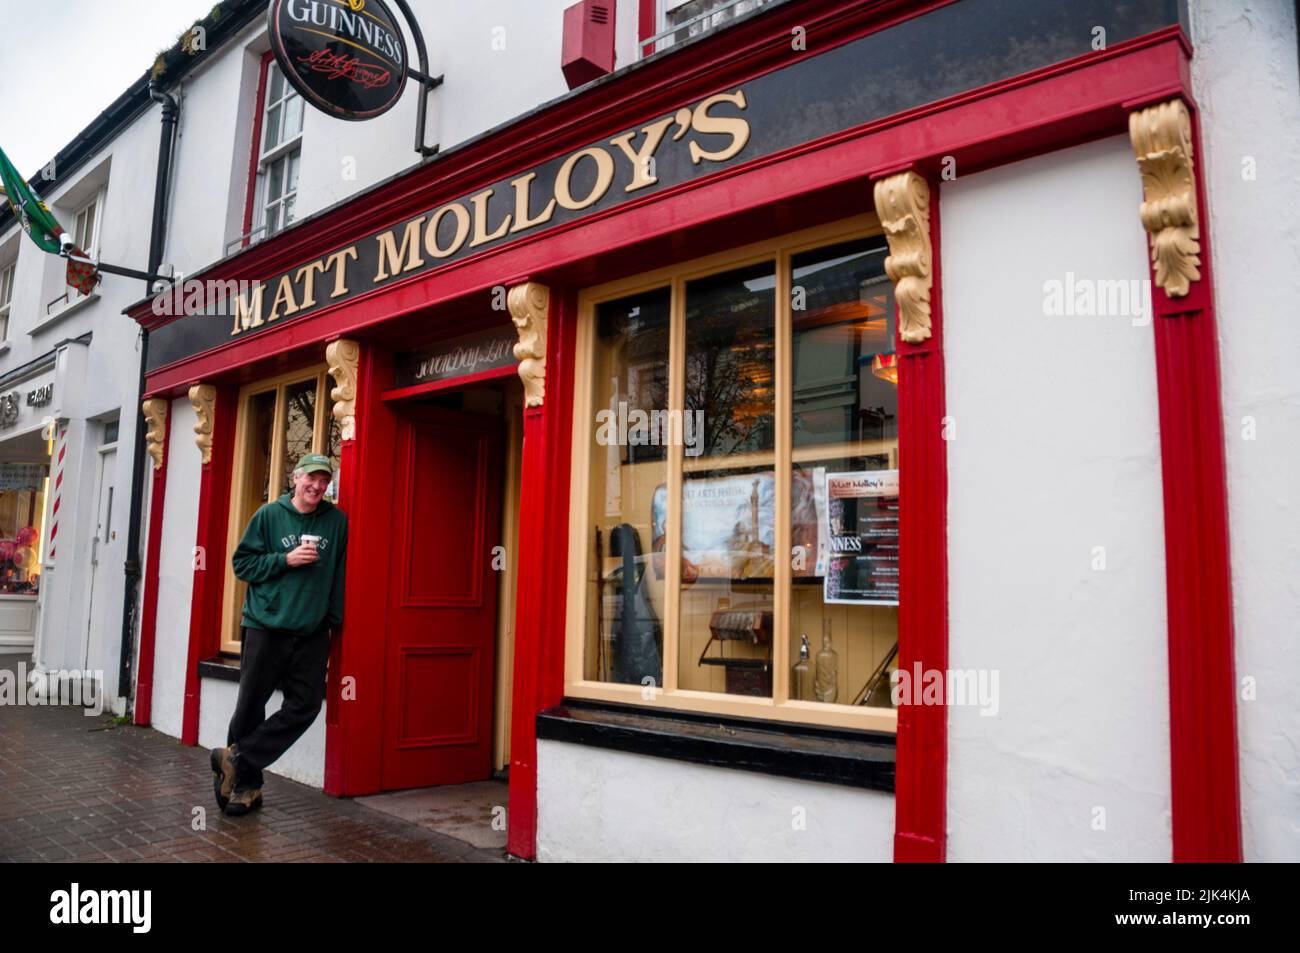 Famous Irish music venue and pub Mat Molloy's in Westport, Ireland. Stock Photo